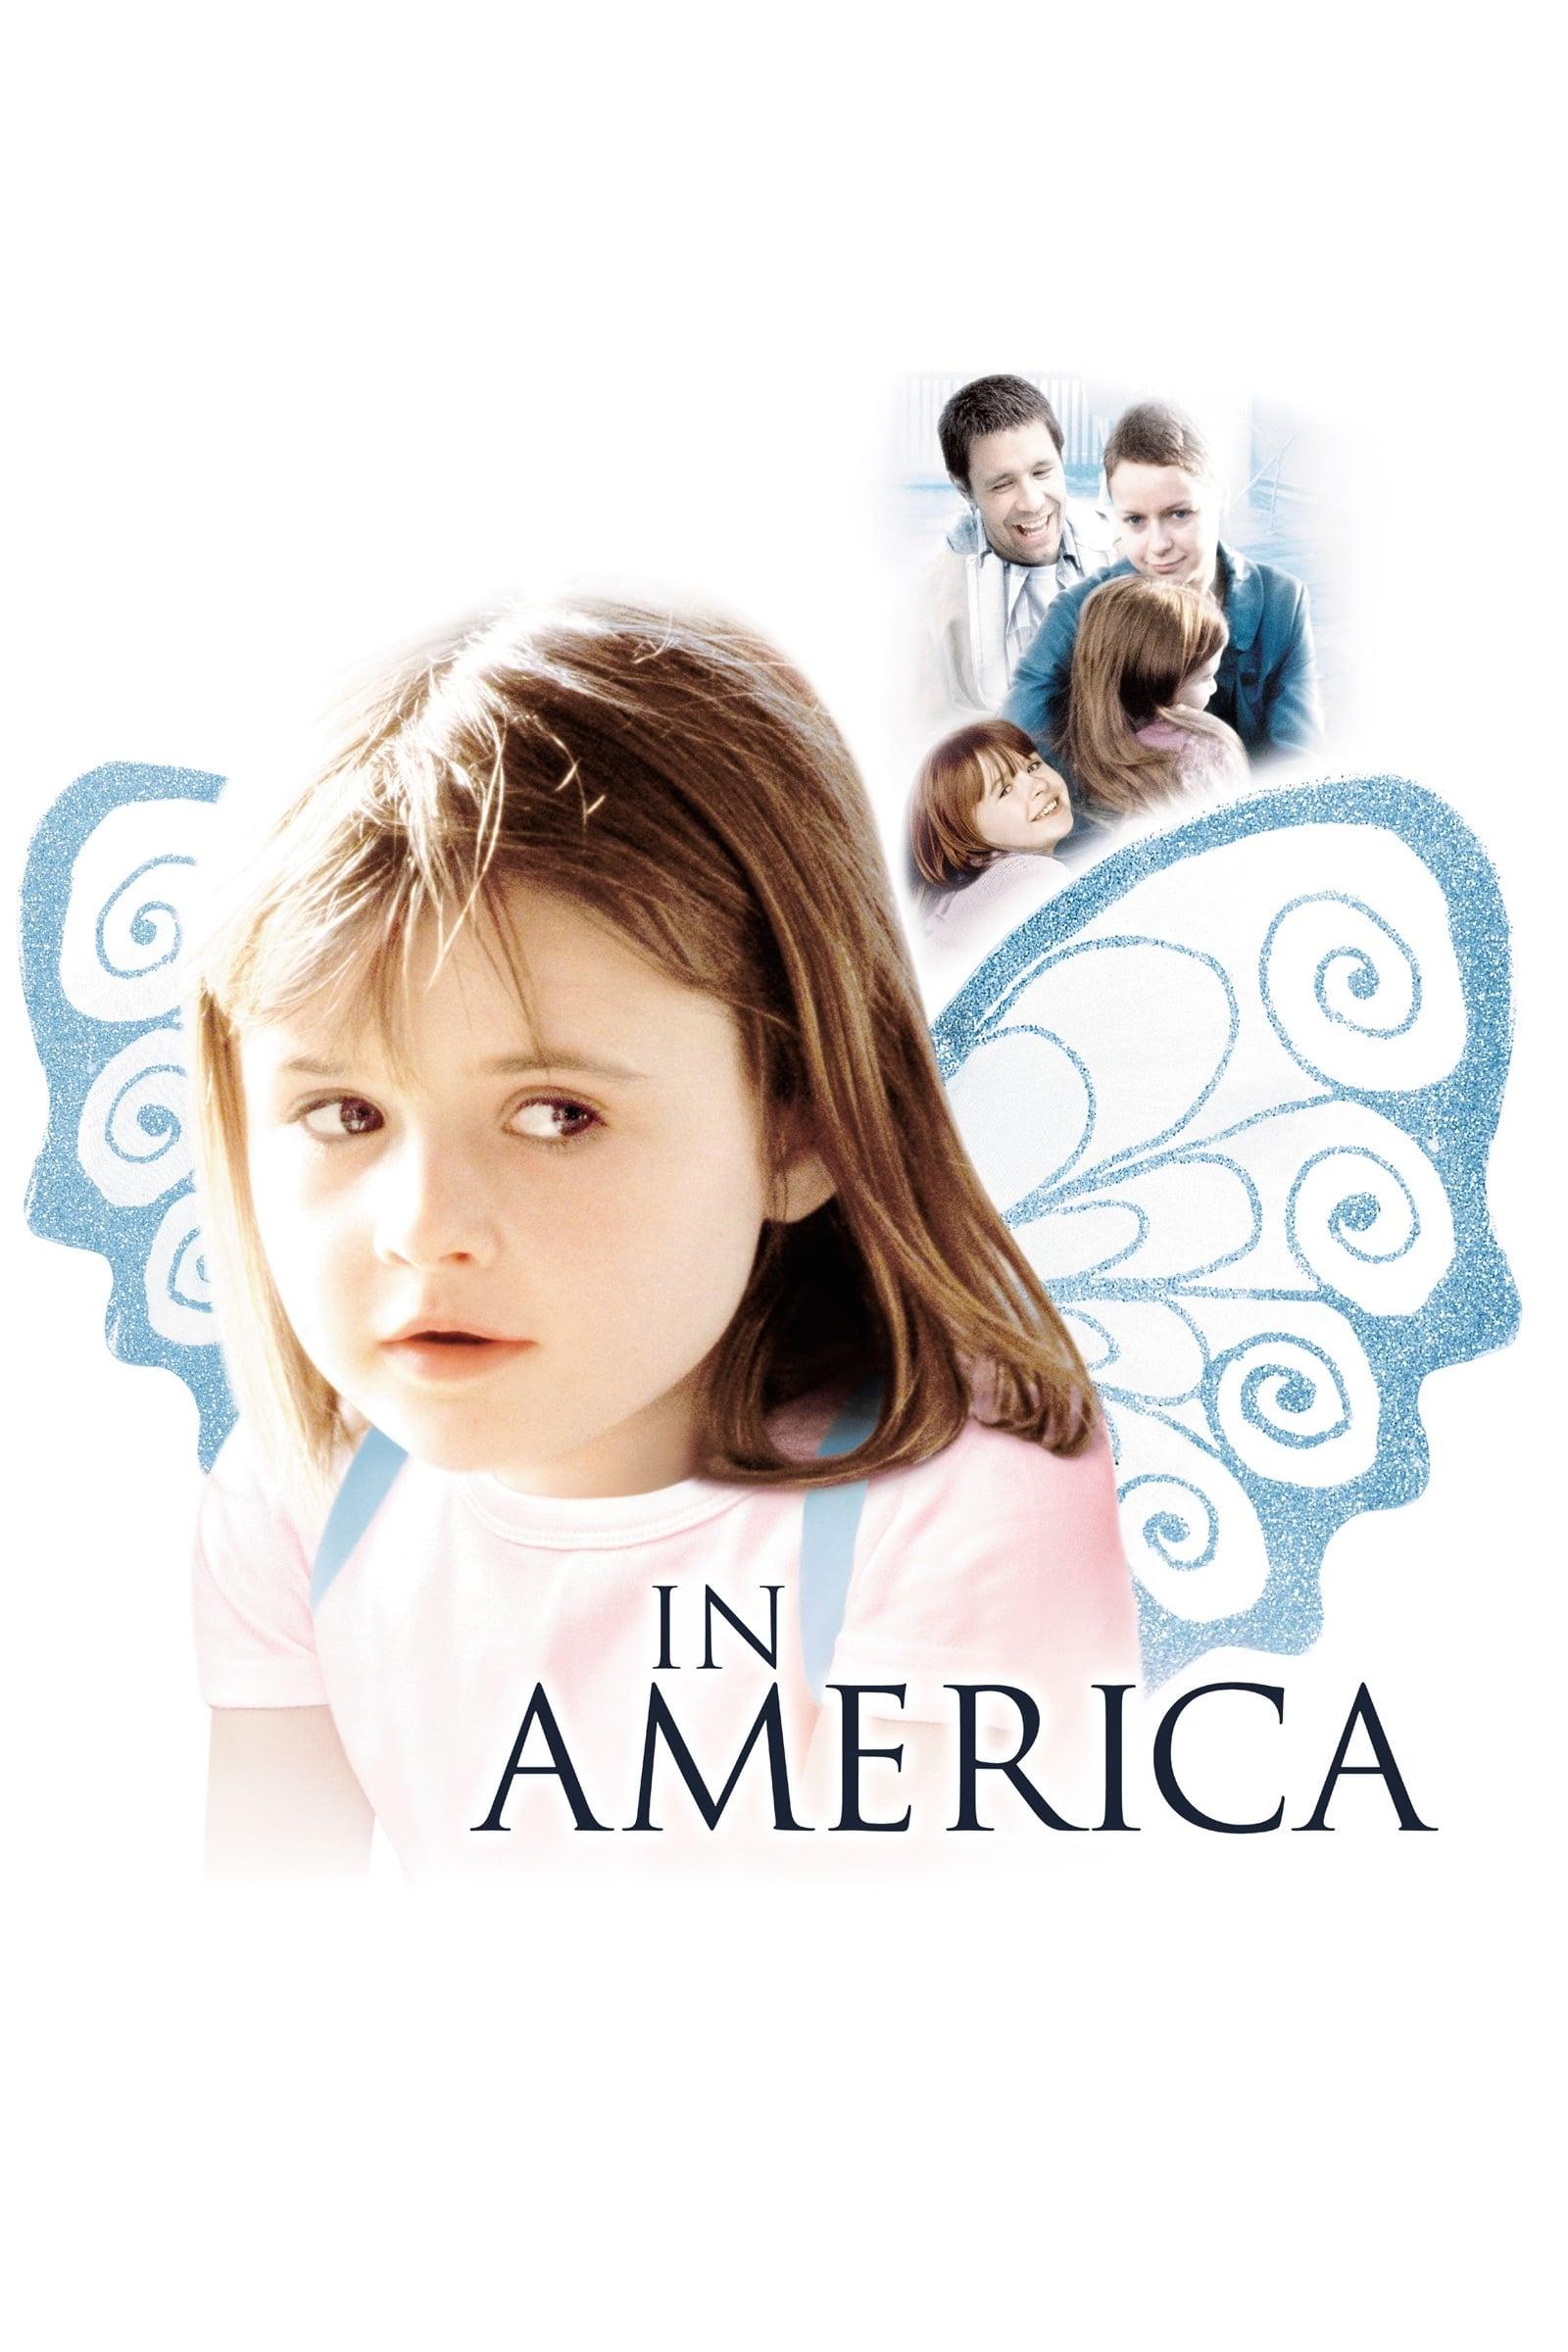 In America poster